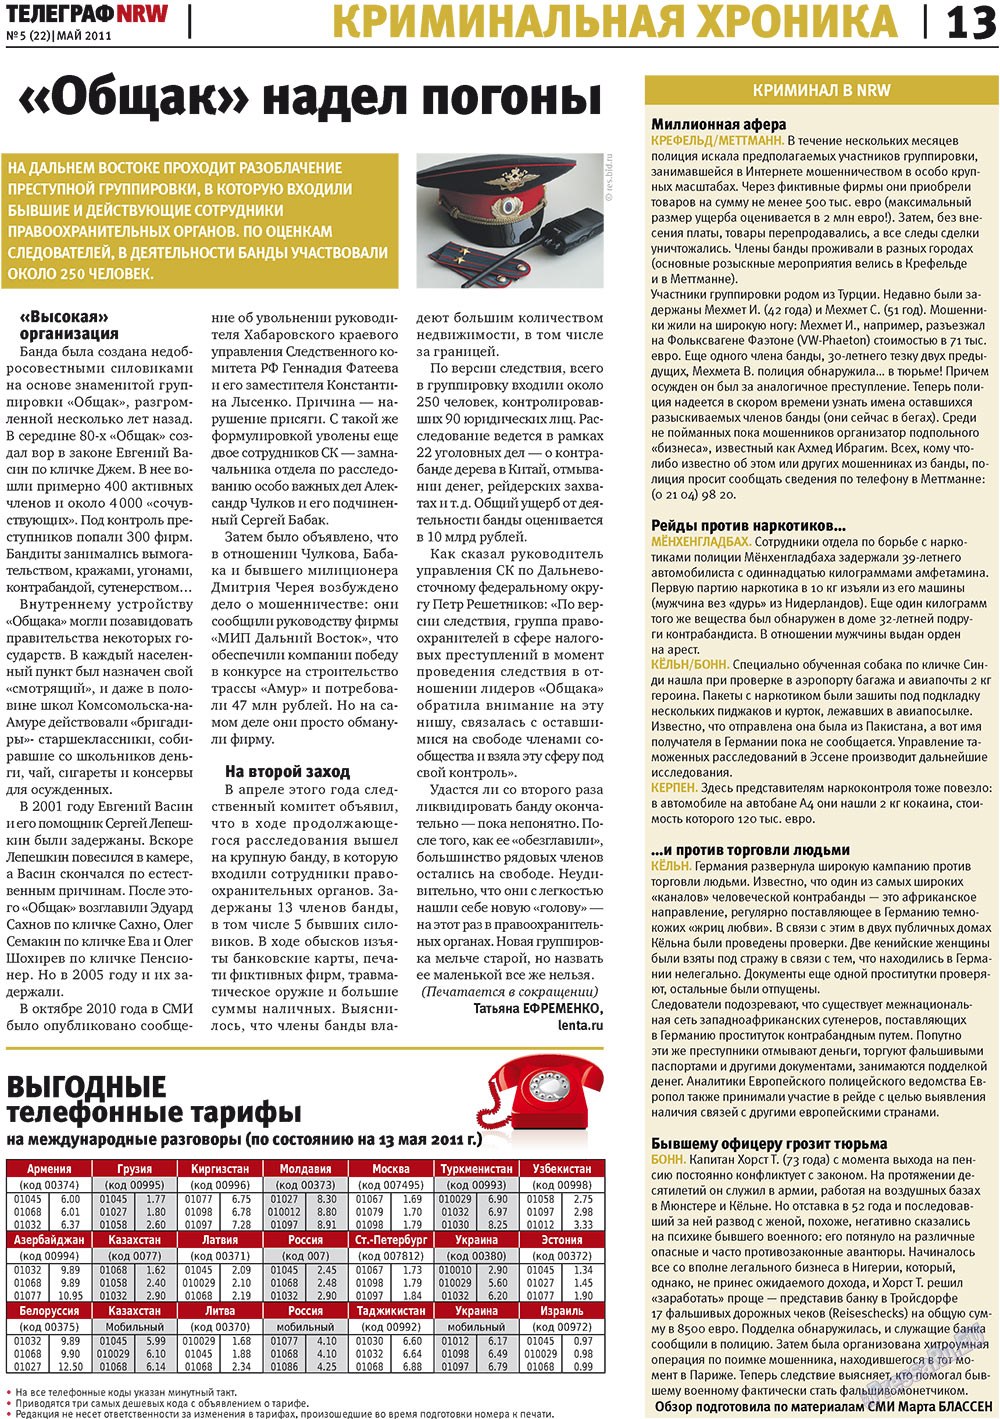 Телеграф NRW, газета. 2011 №5 стр.13